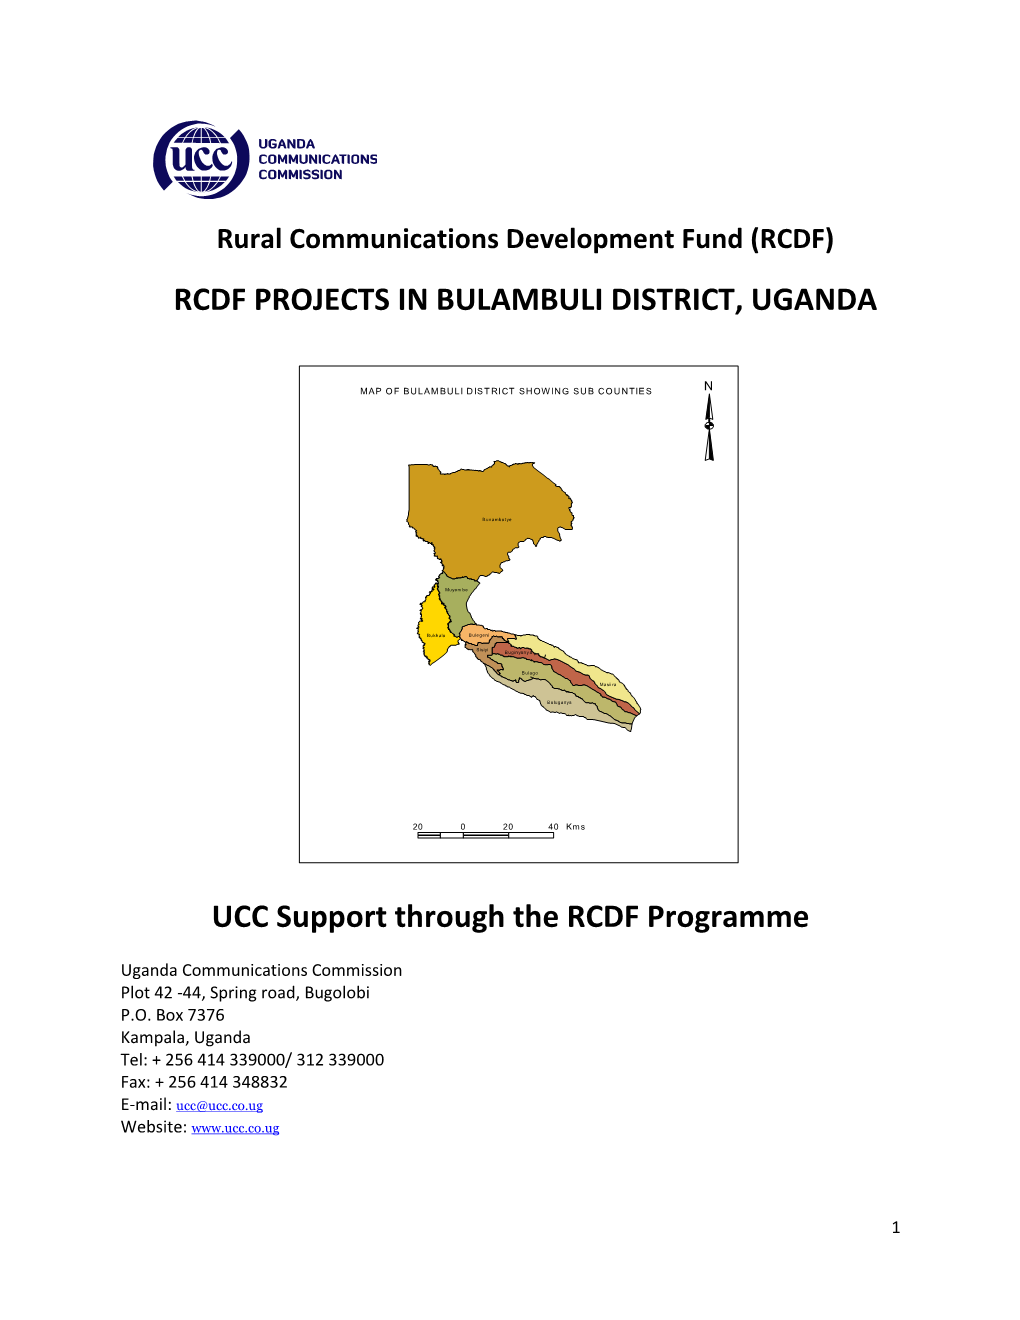 RCDF PROJECTS in BULAMBULI DISTRICT, UGANDA UCC Support